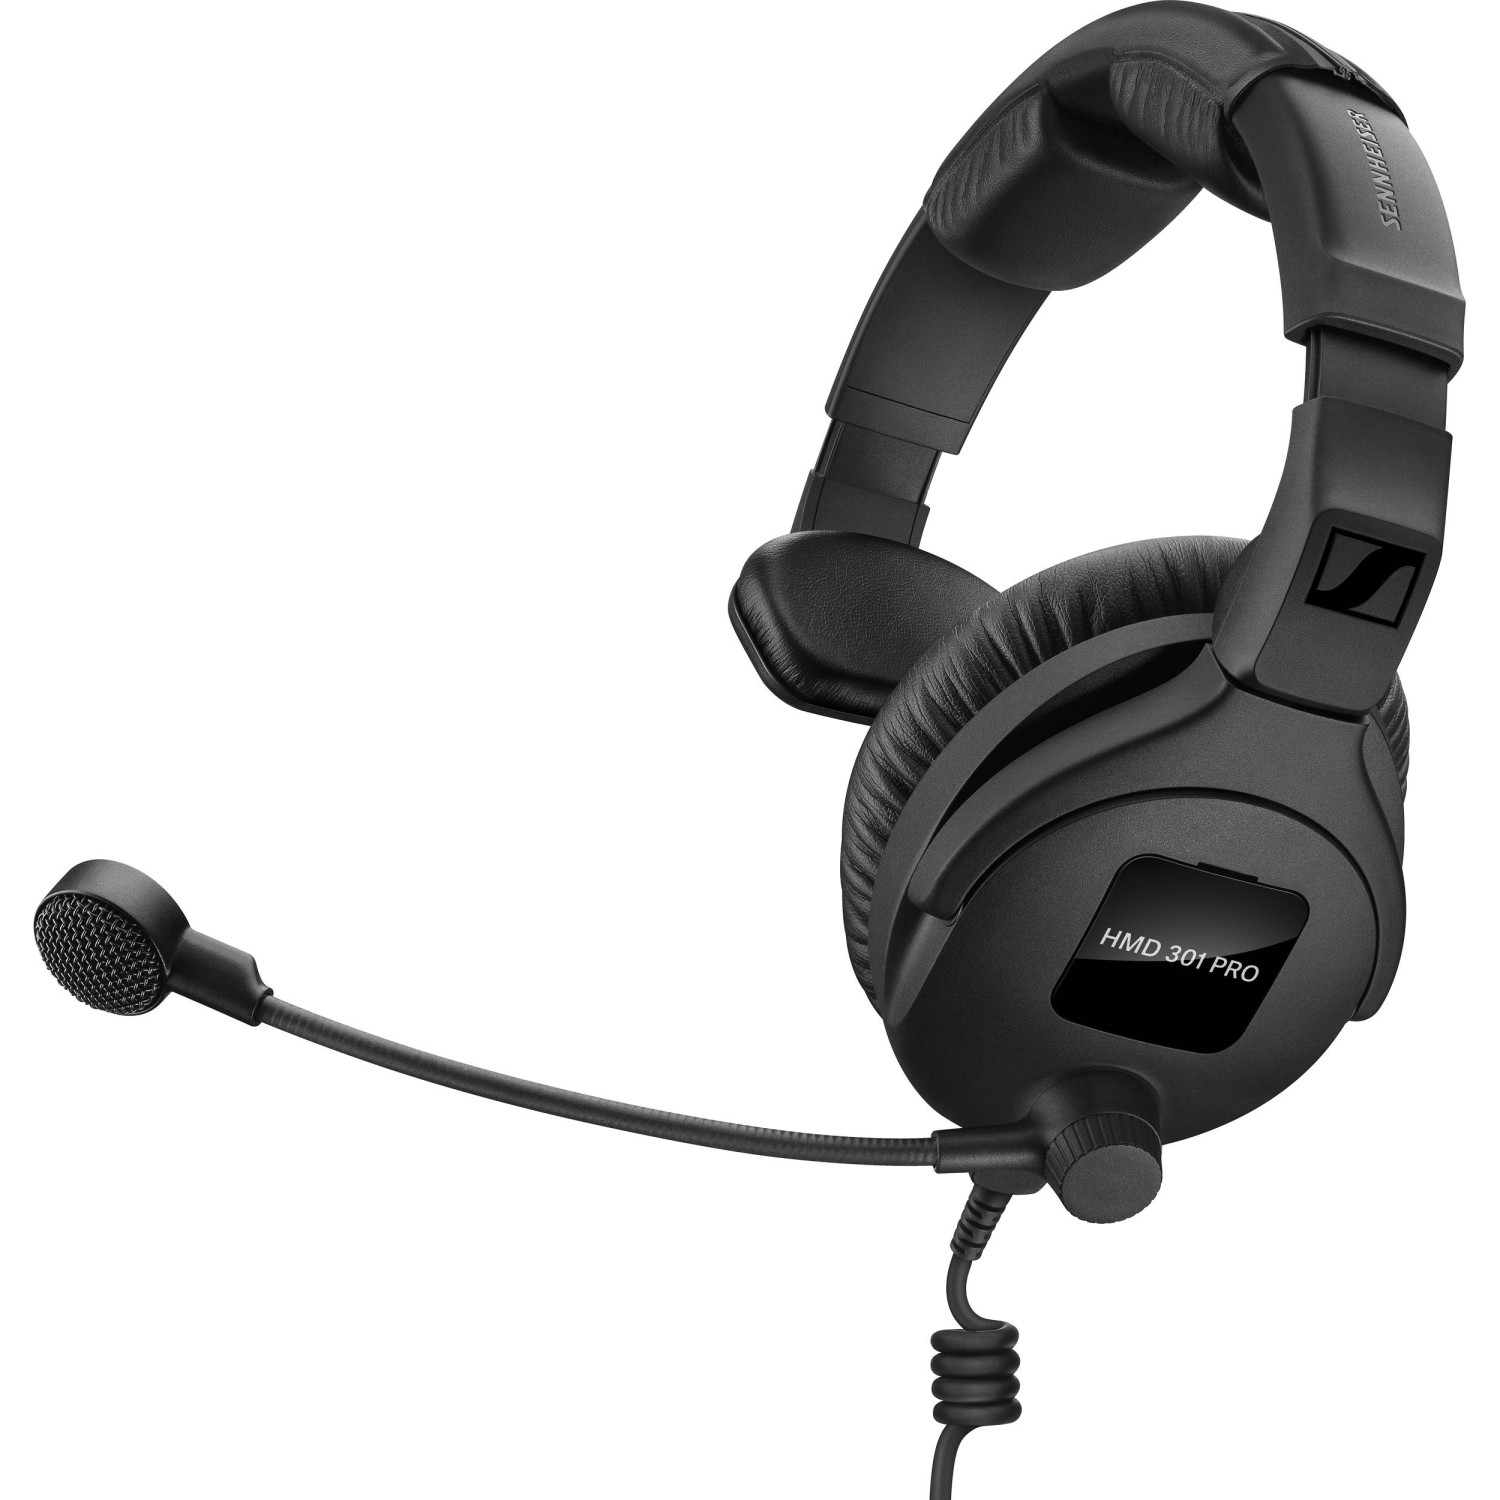 sennheiser-hmd-301-pro-broadcast-headset-ultra-linear-single-sided-1432677